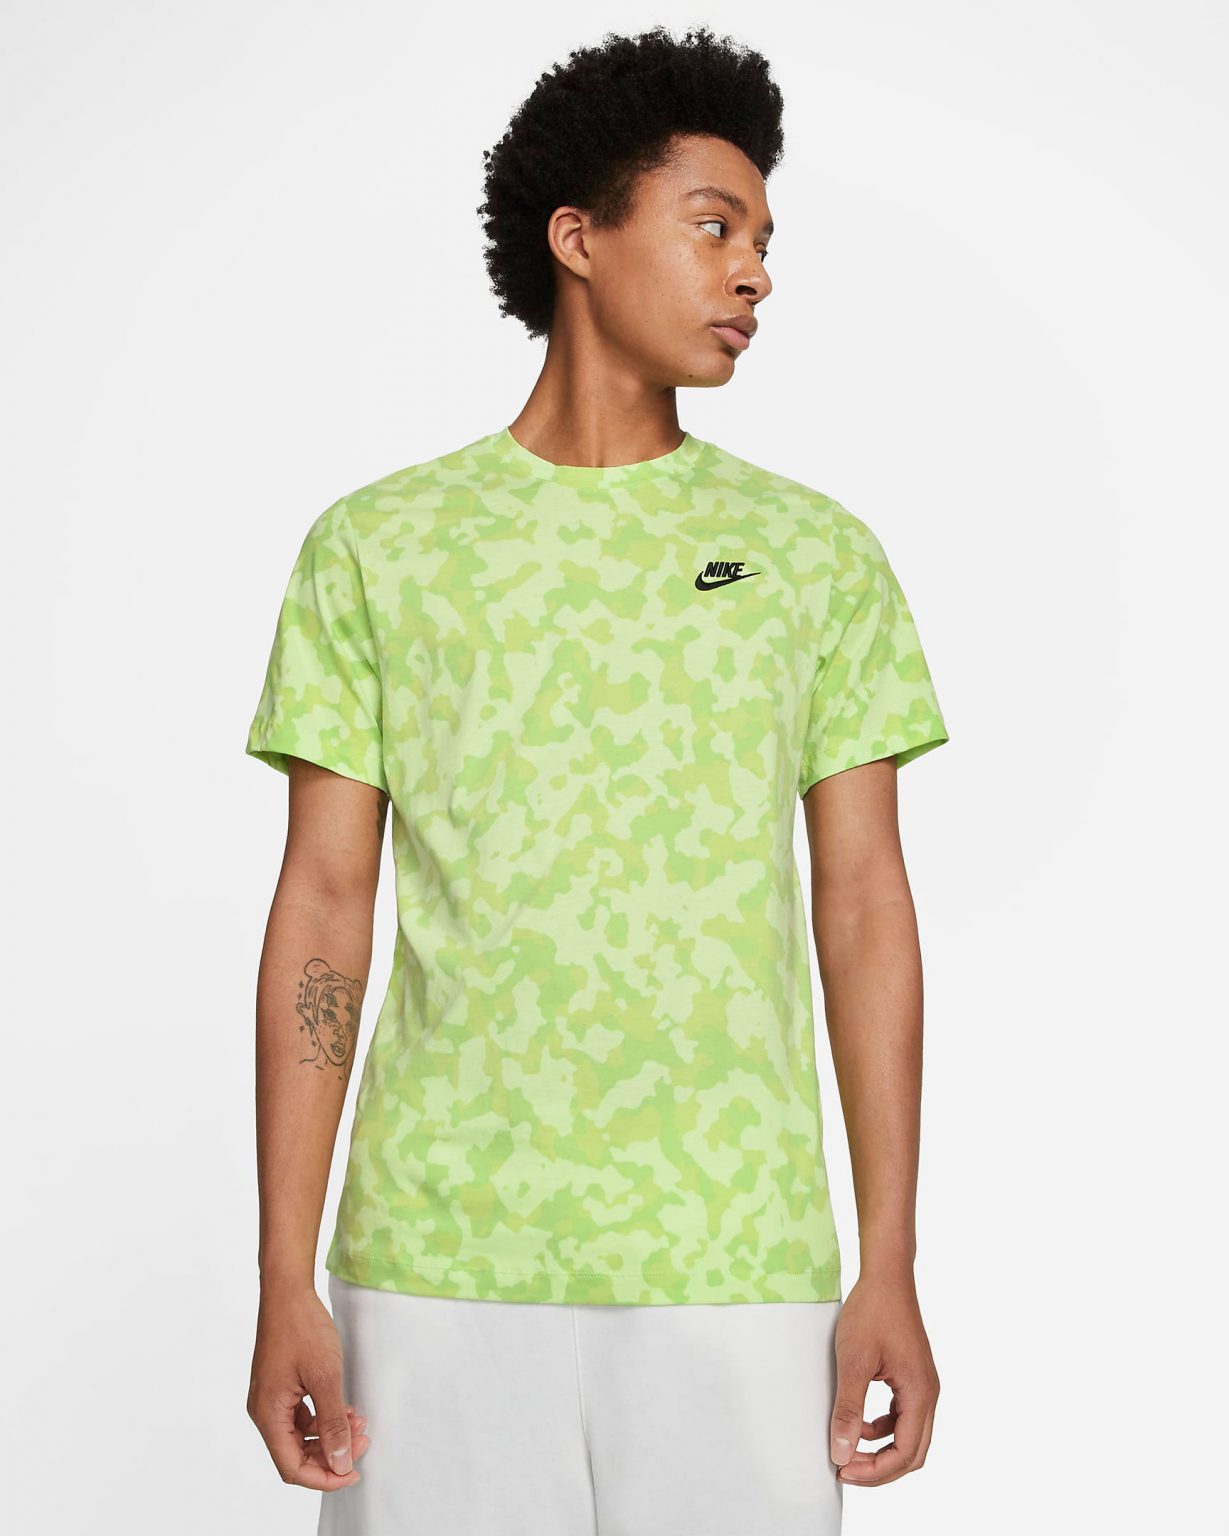 Nike Kobe 6 Protro Grinch Shirts Outfits | SneakerFits.com